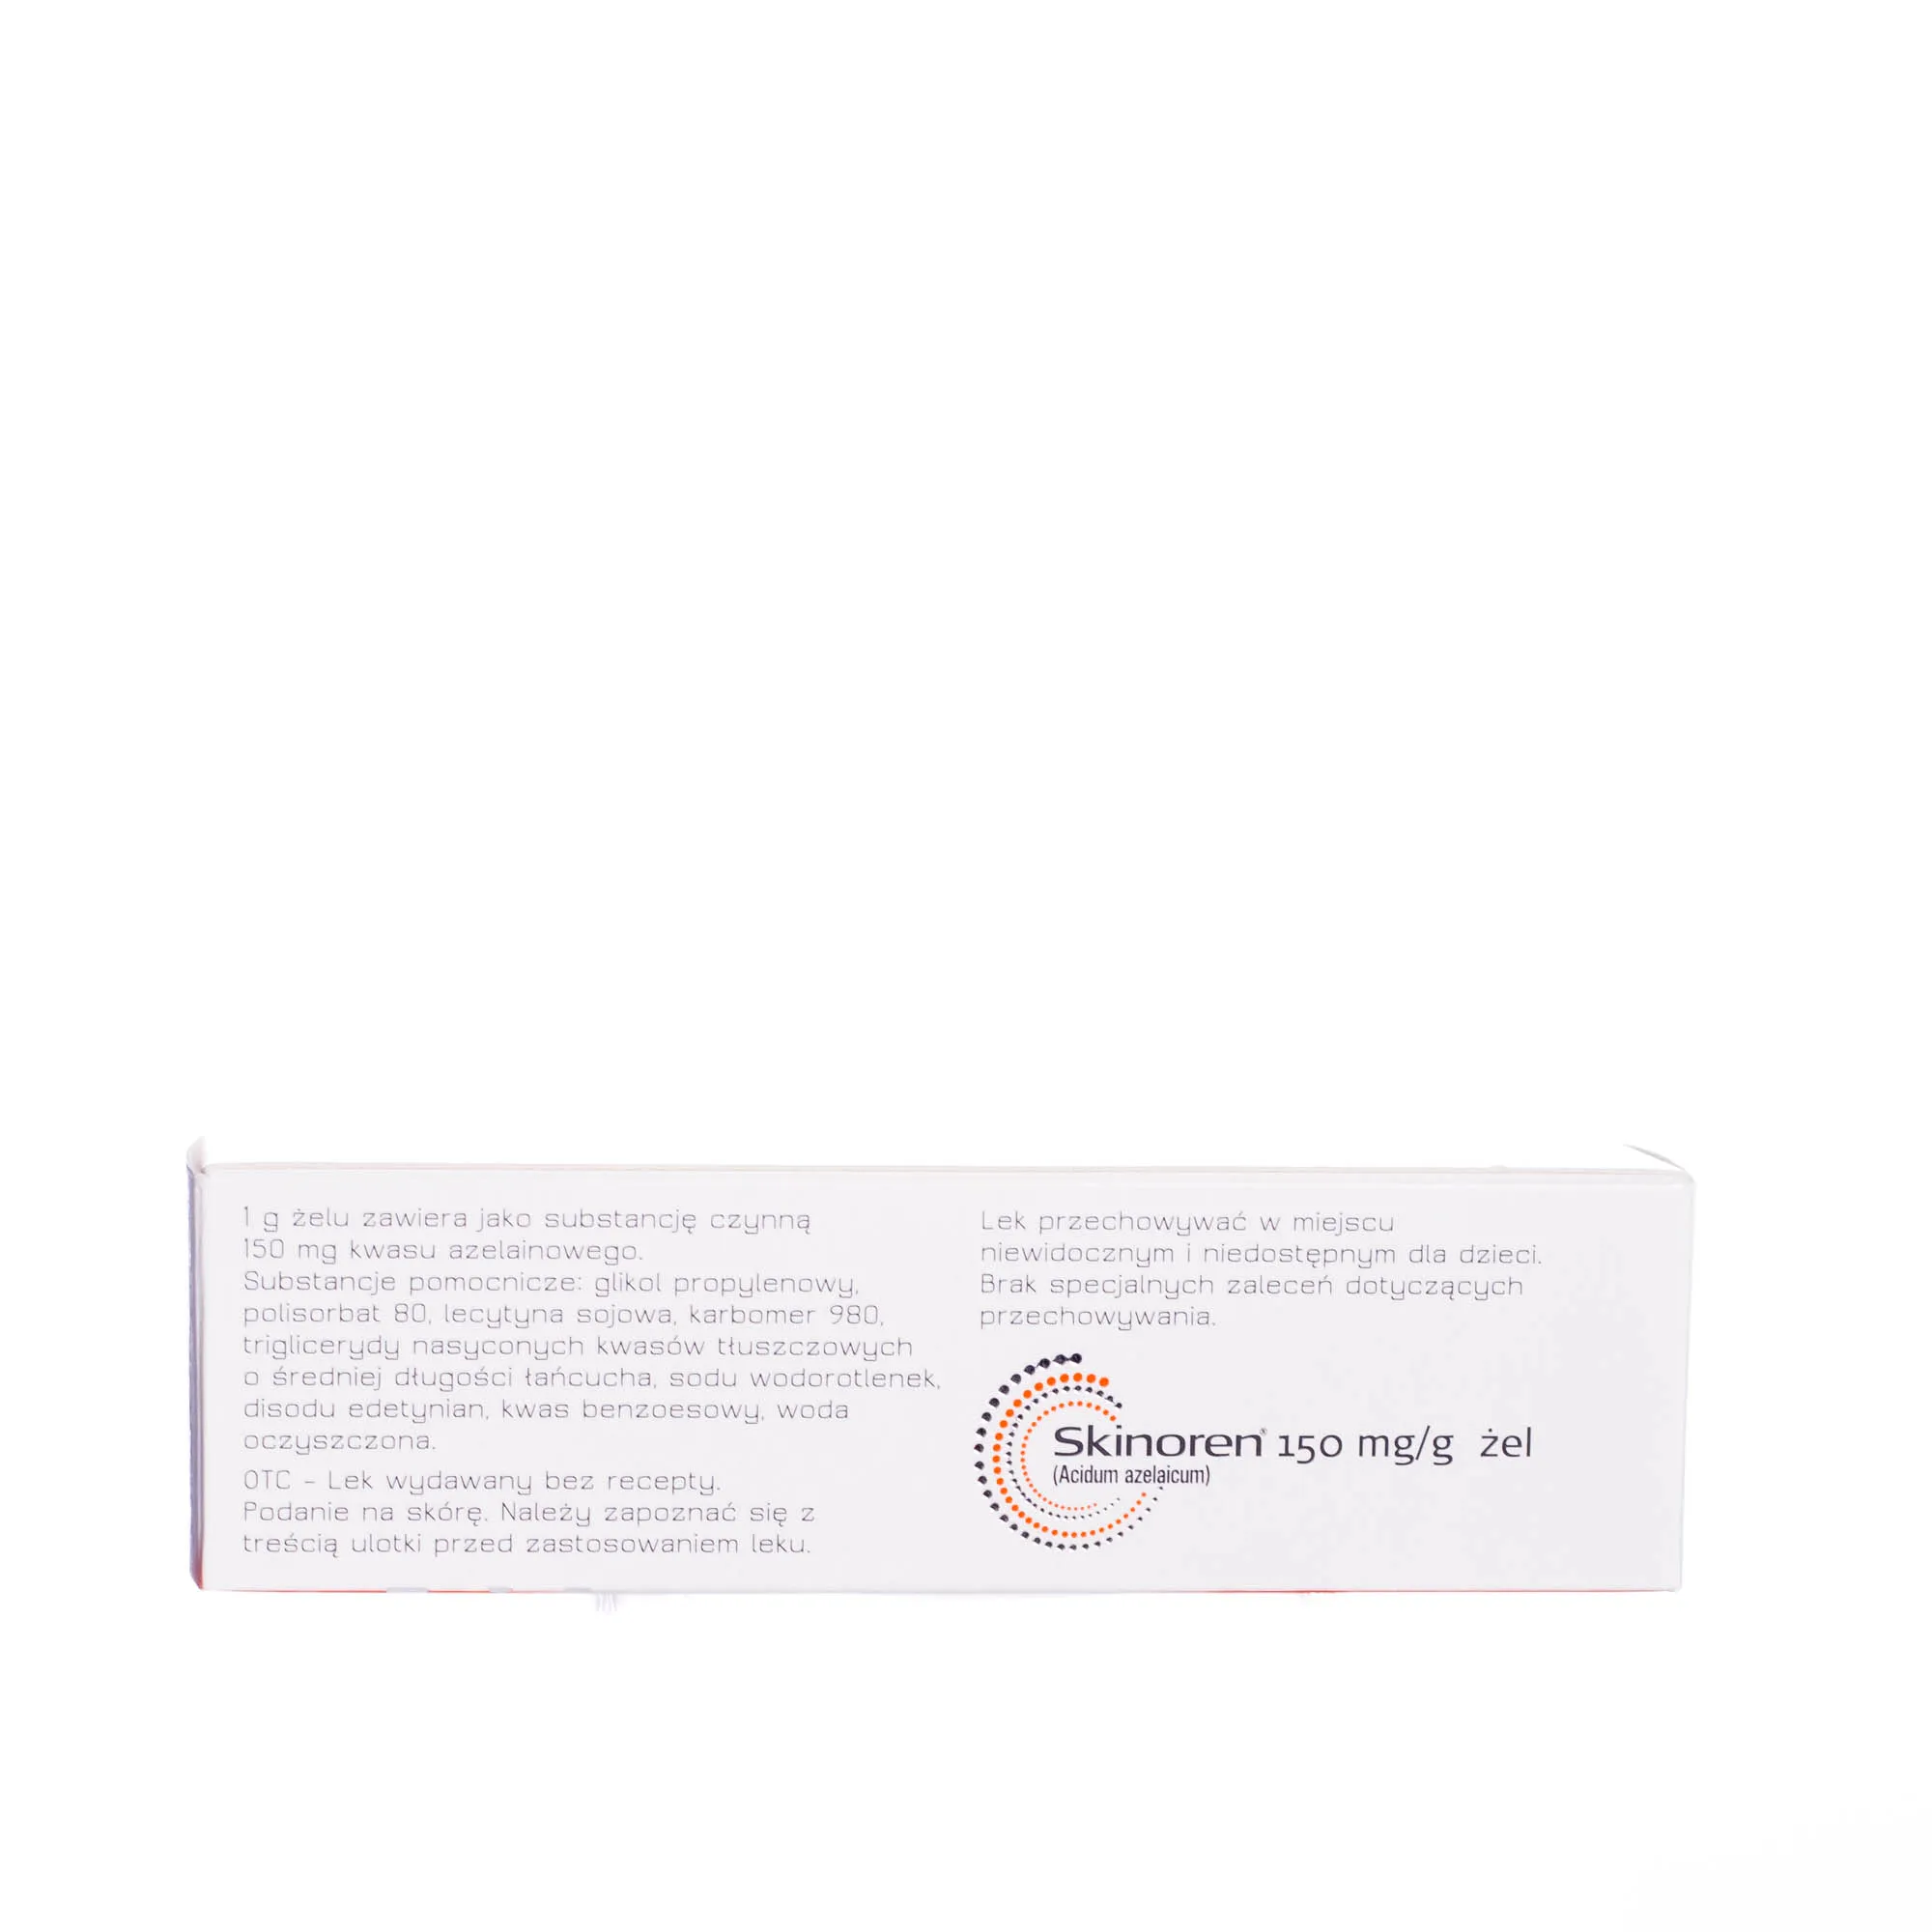 Skinoren, Acidum azelaicum, 150 mg/g żel, 30 g żelu 